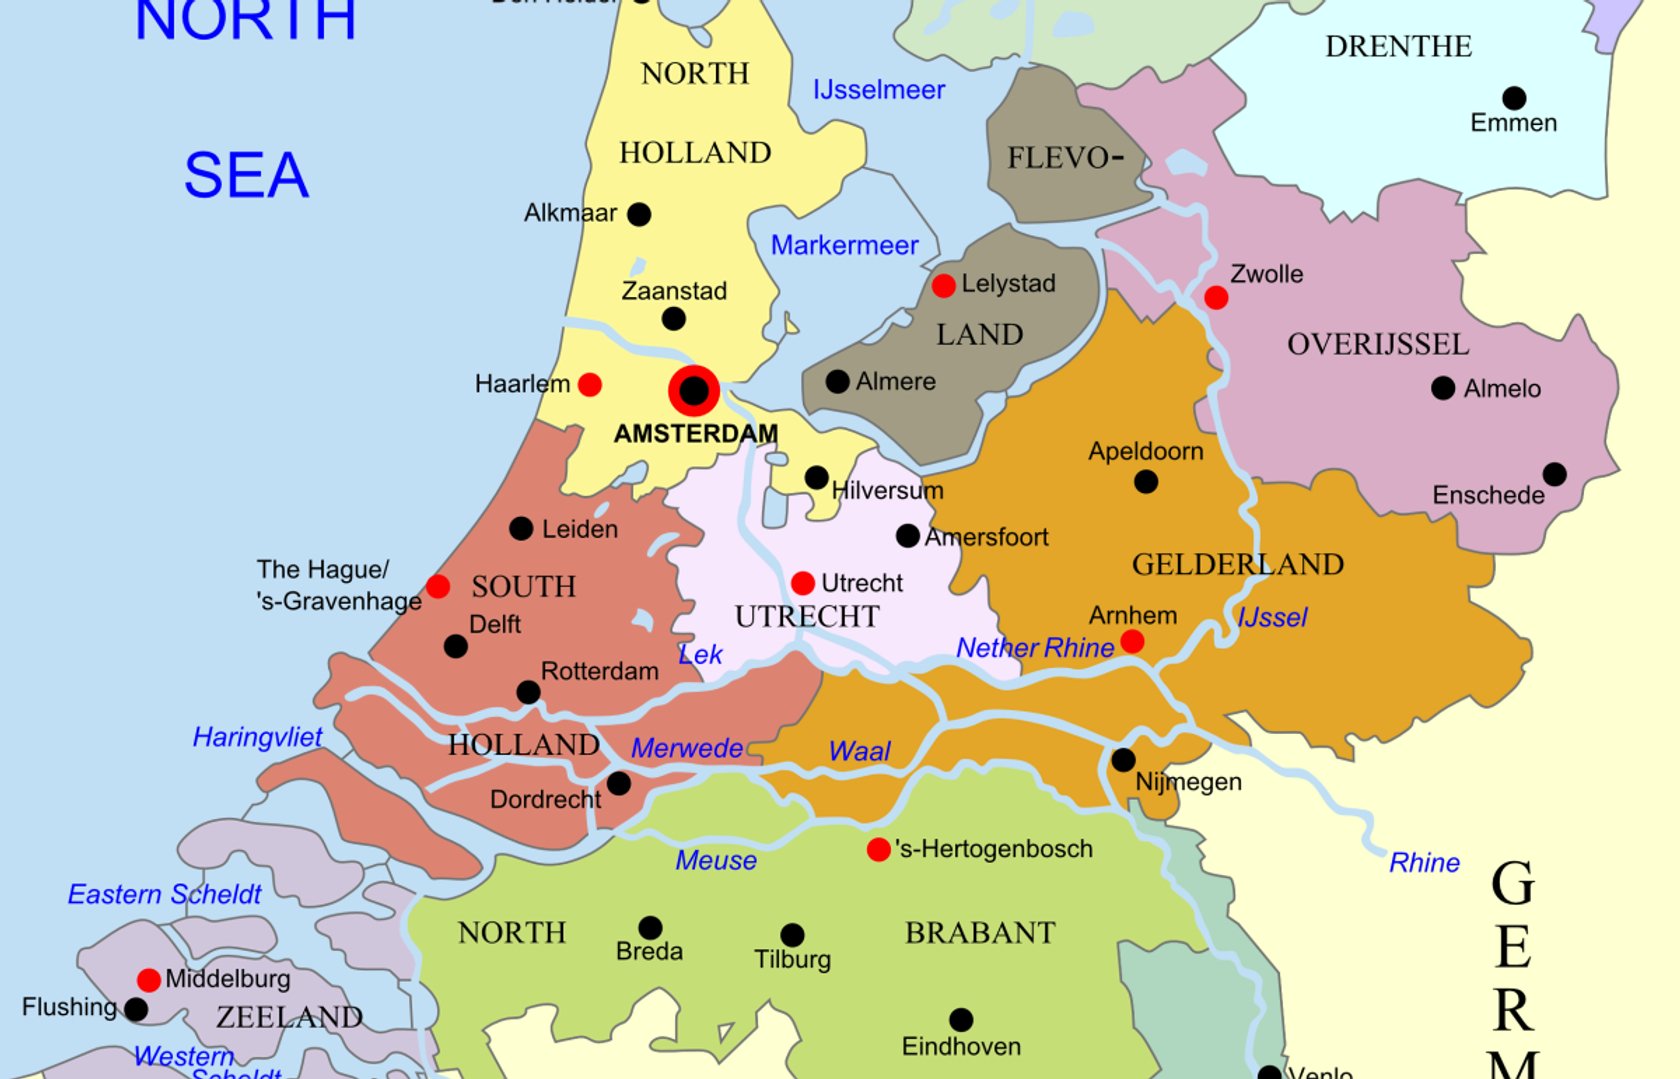 нидерланды на карте мира